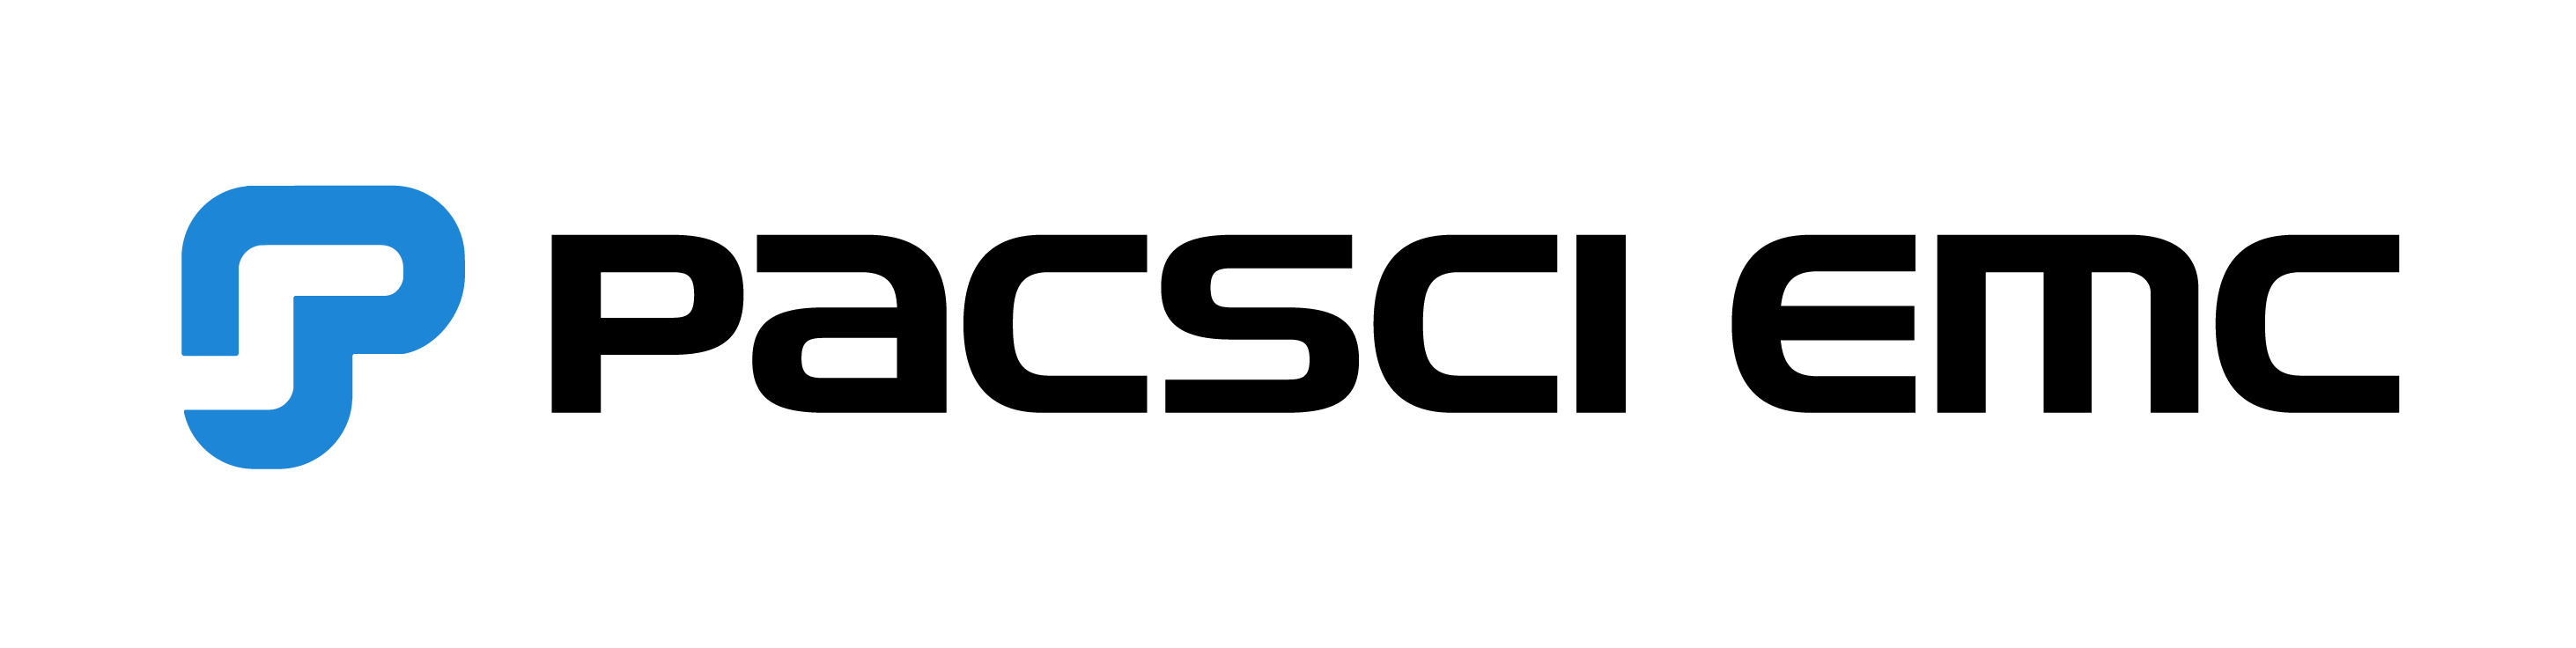 PacSci EMC logo